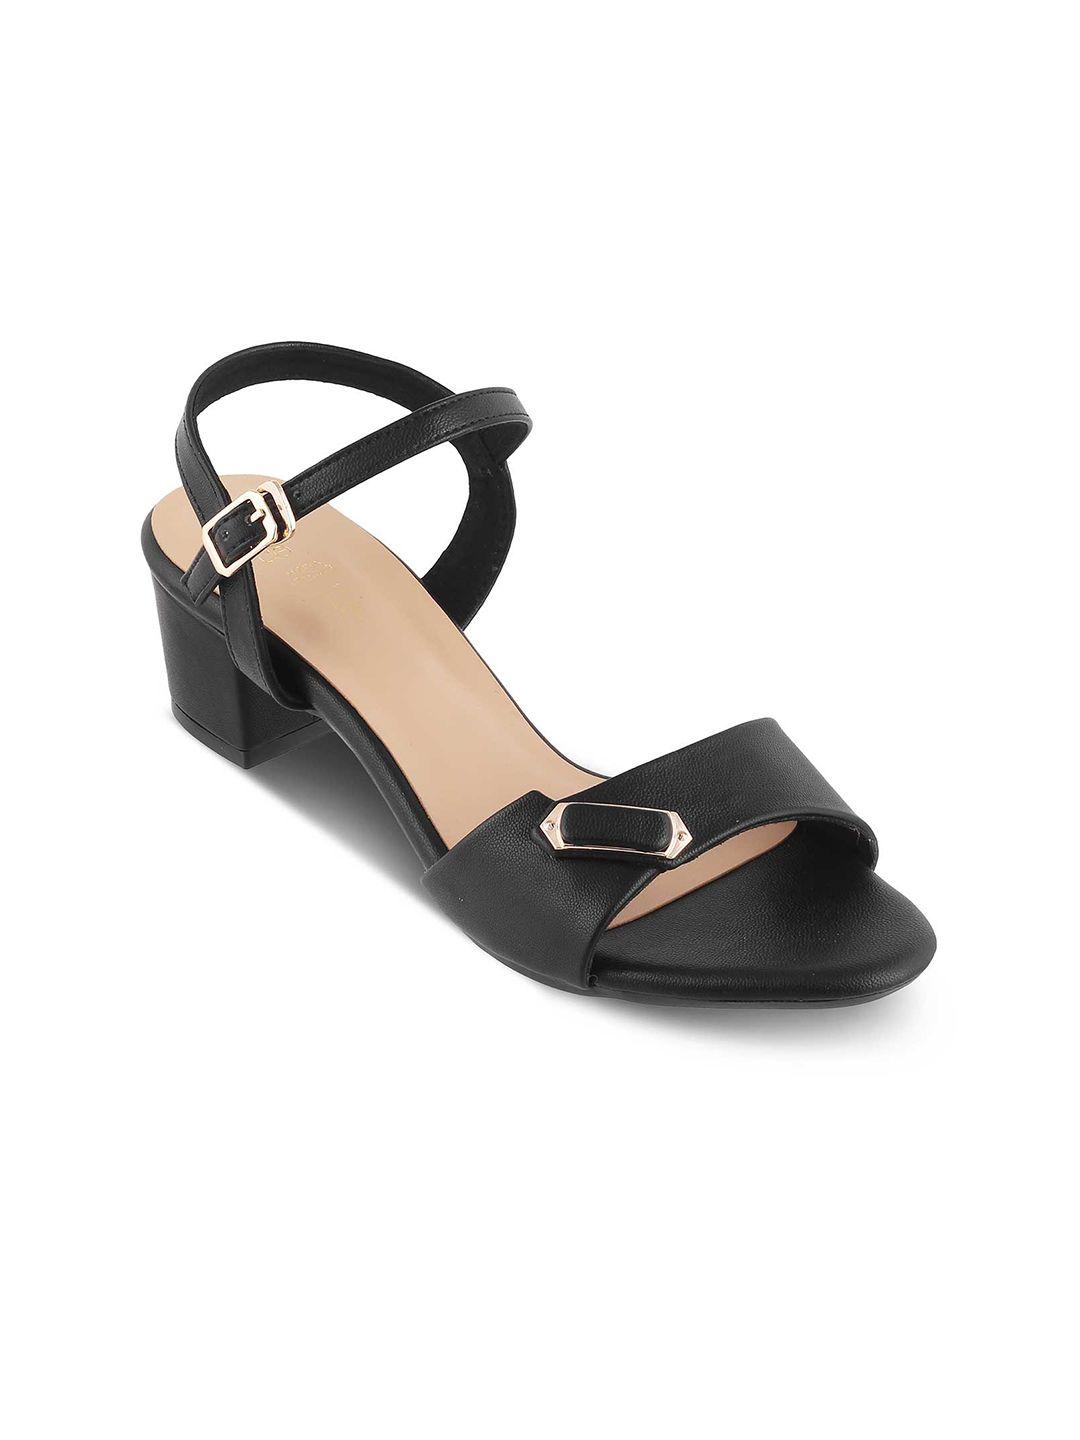 tresmode-maui-embellished-open-toe-block-heels-with-buckles